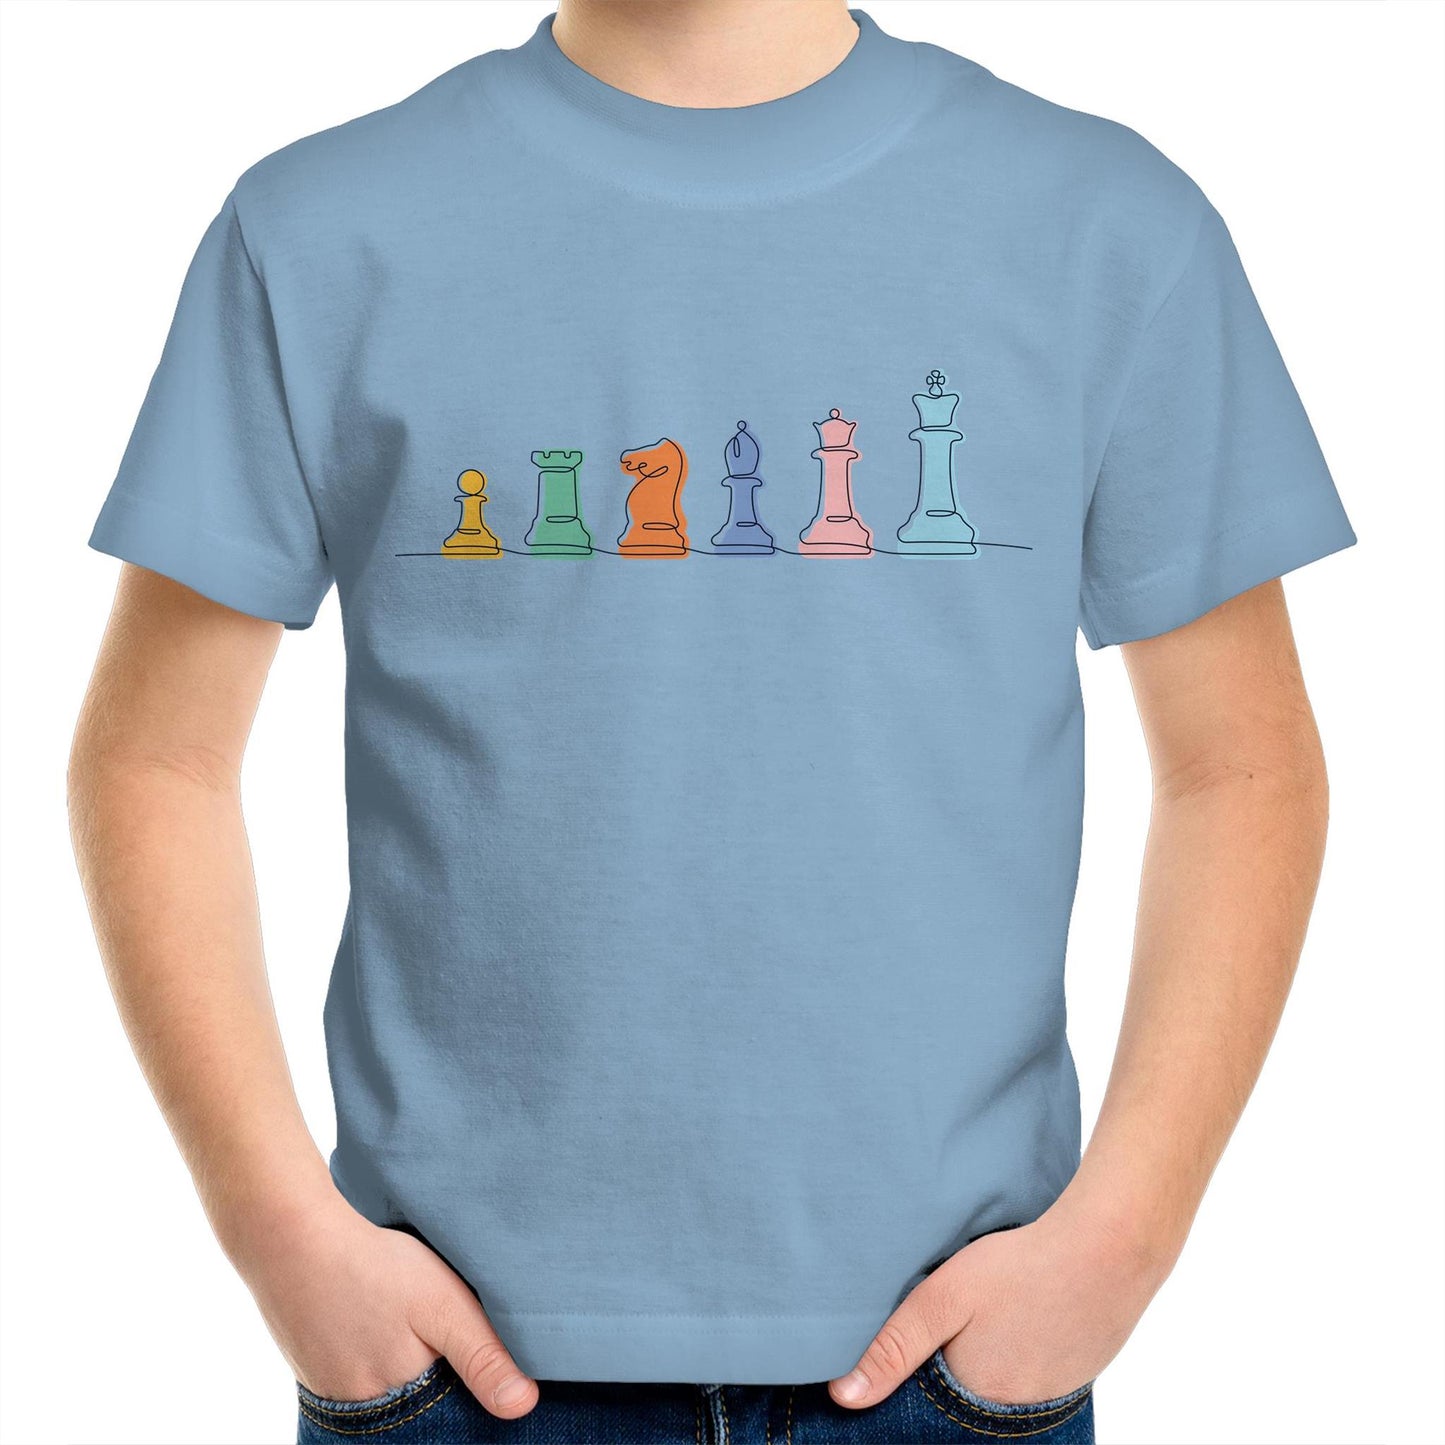 Chess - Kids Youth T-Shirt Carolina Blue Kids Youth T-shirt Chess Games